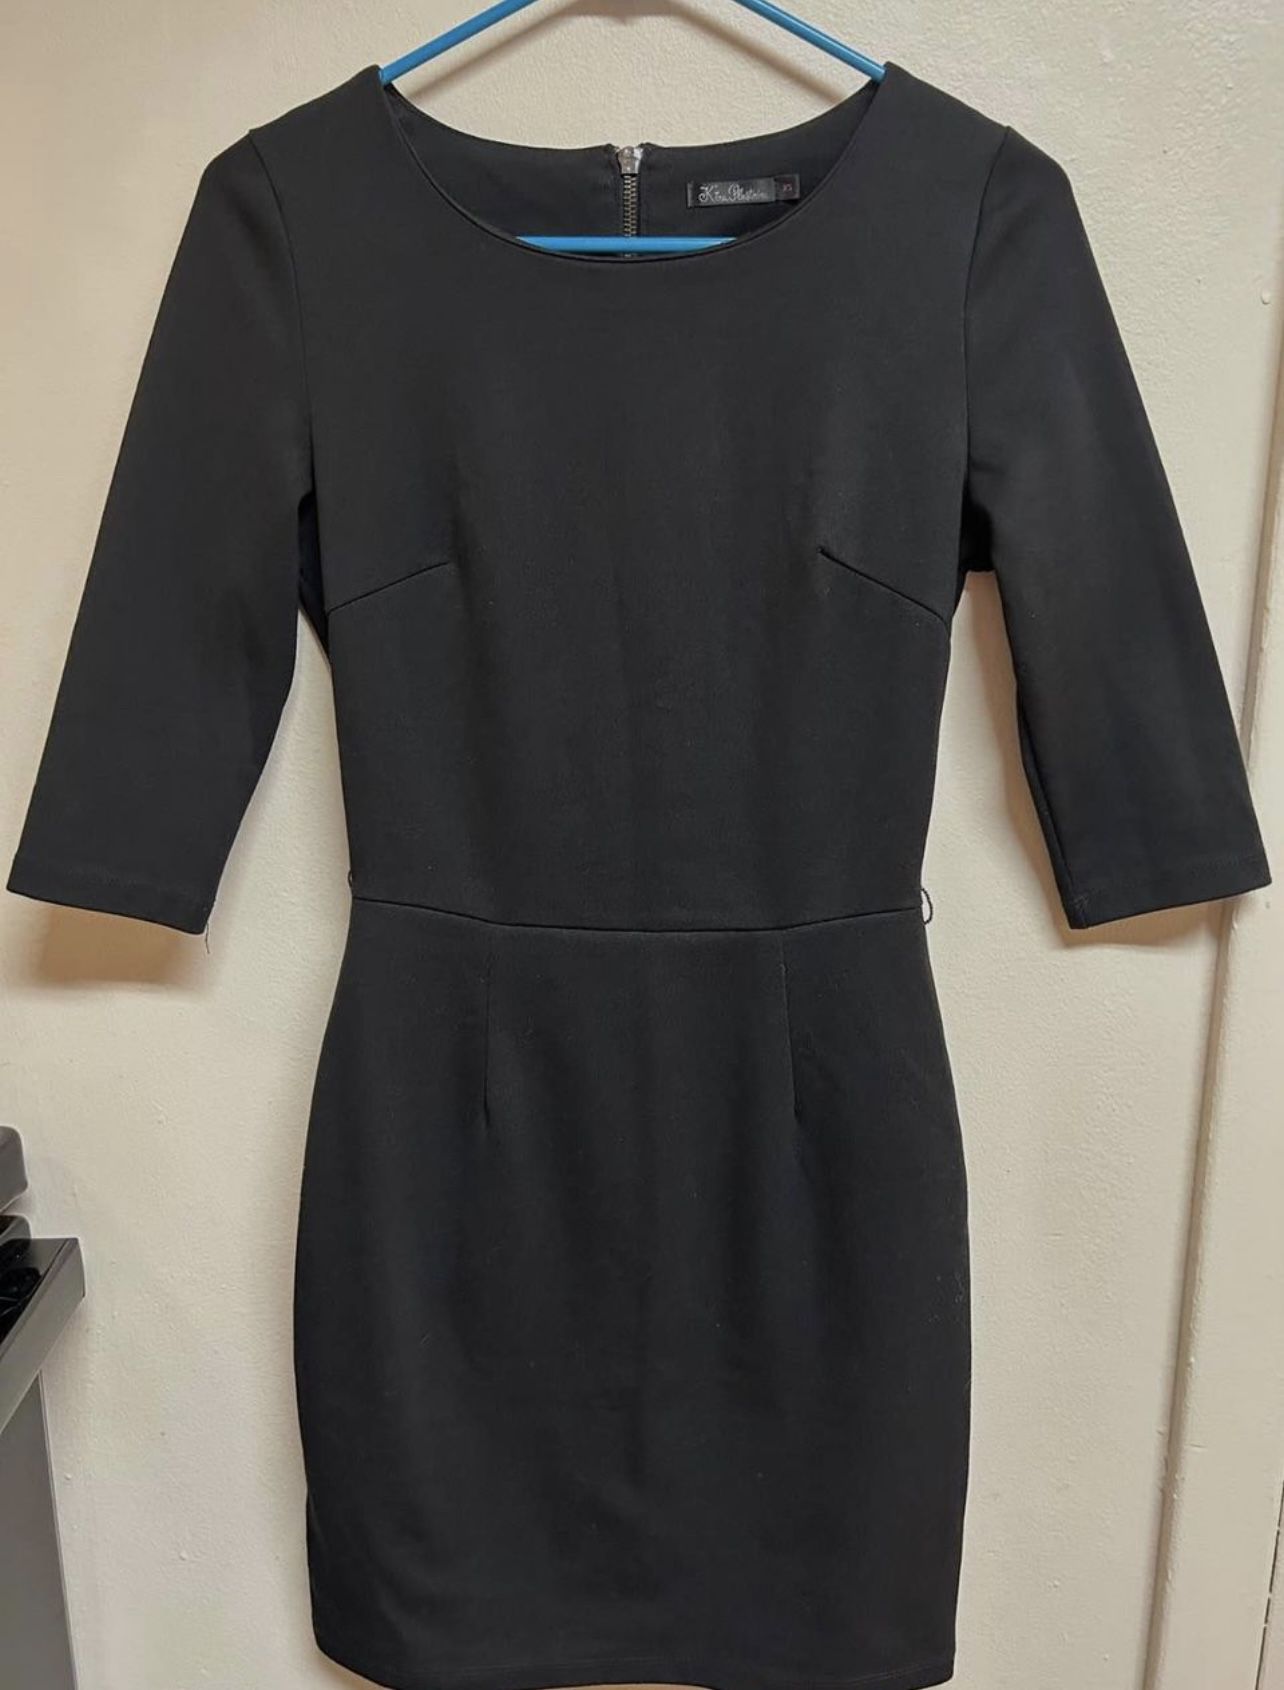 Kira Plastinina- Black Stretchy Cotton Fitted Pencil Dress Size XS